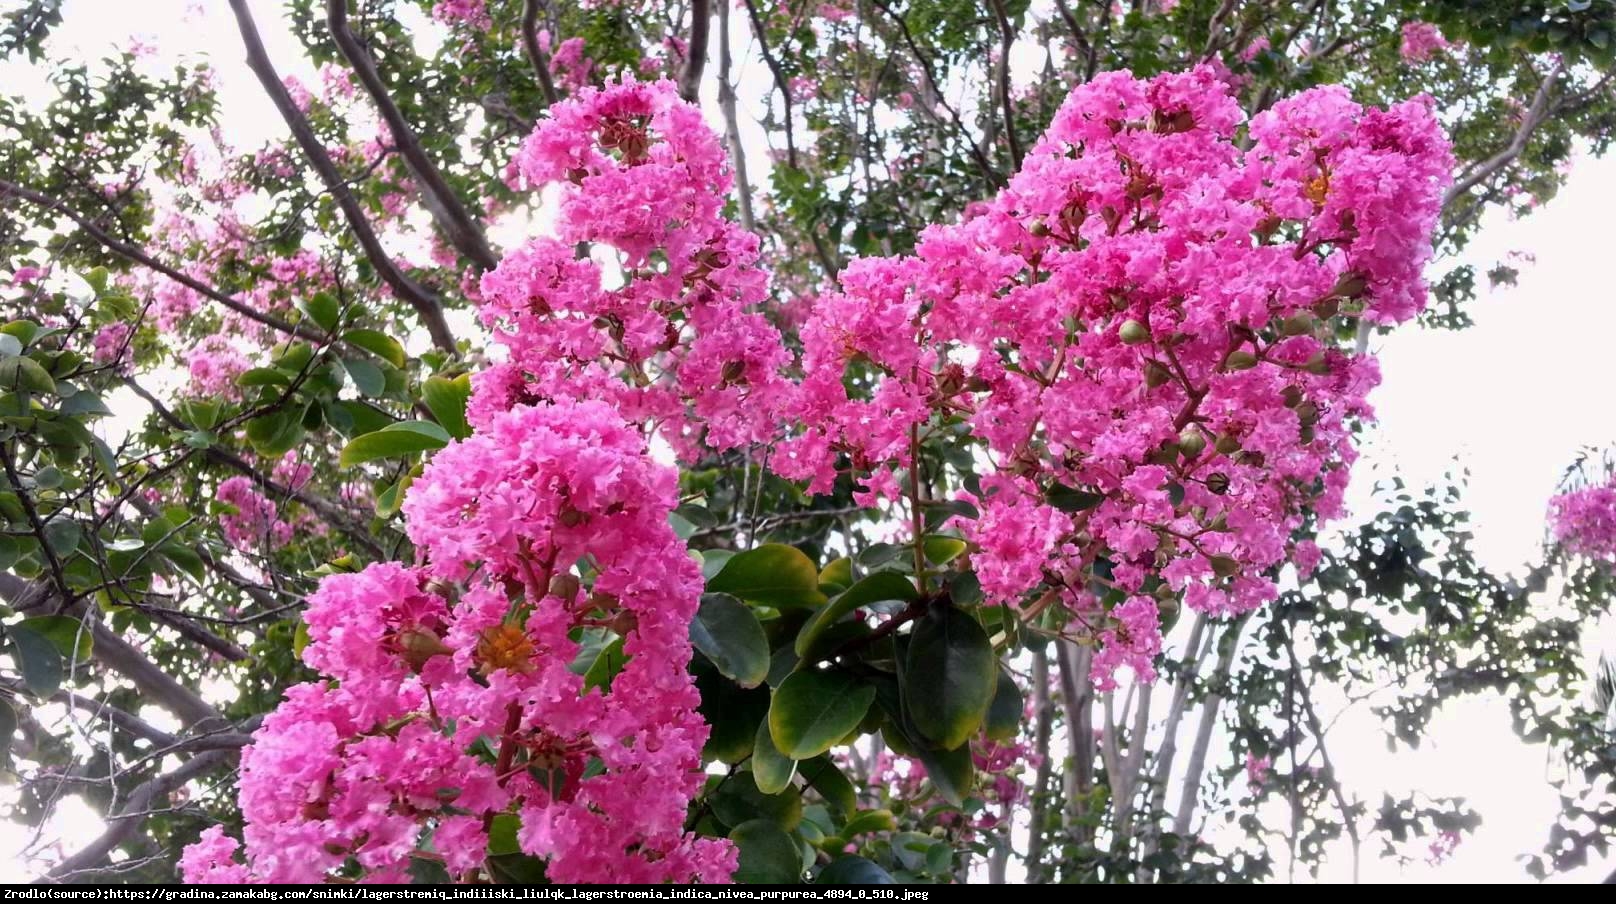 Lagerstremia indyjska Magnifica Rosea - Bez Południa, różowe, PEŁNE kwiaty - Lagerstroemia indica Magnifica Rosea